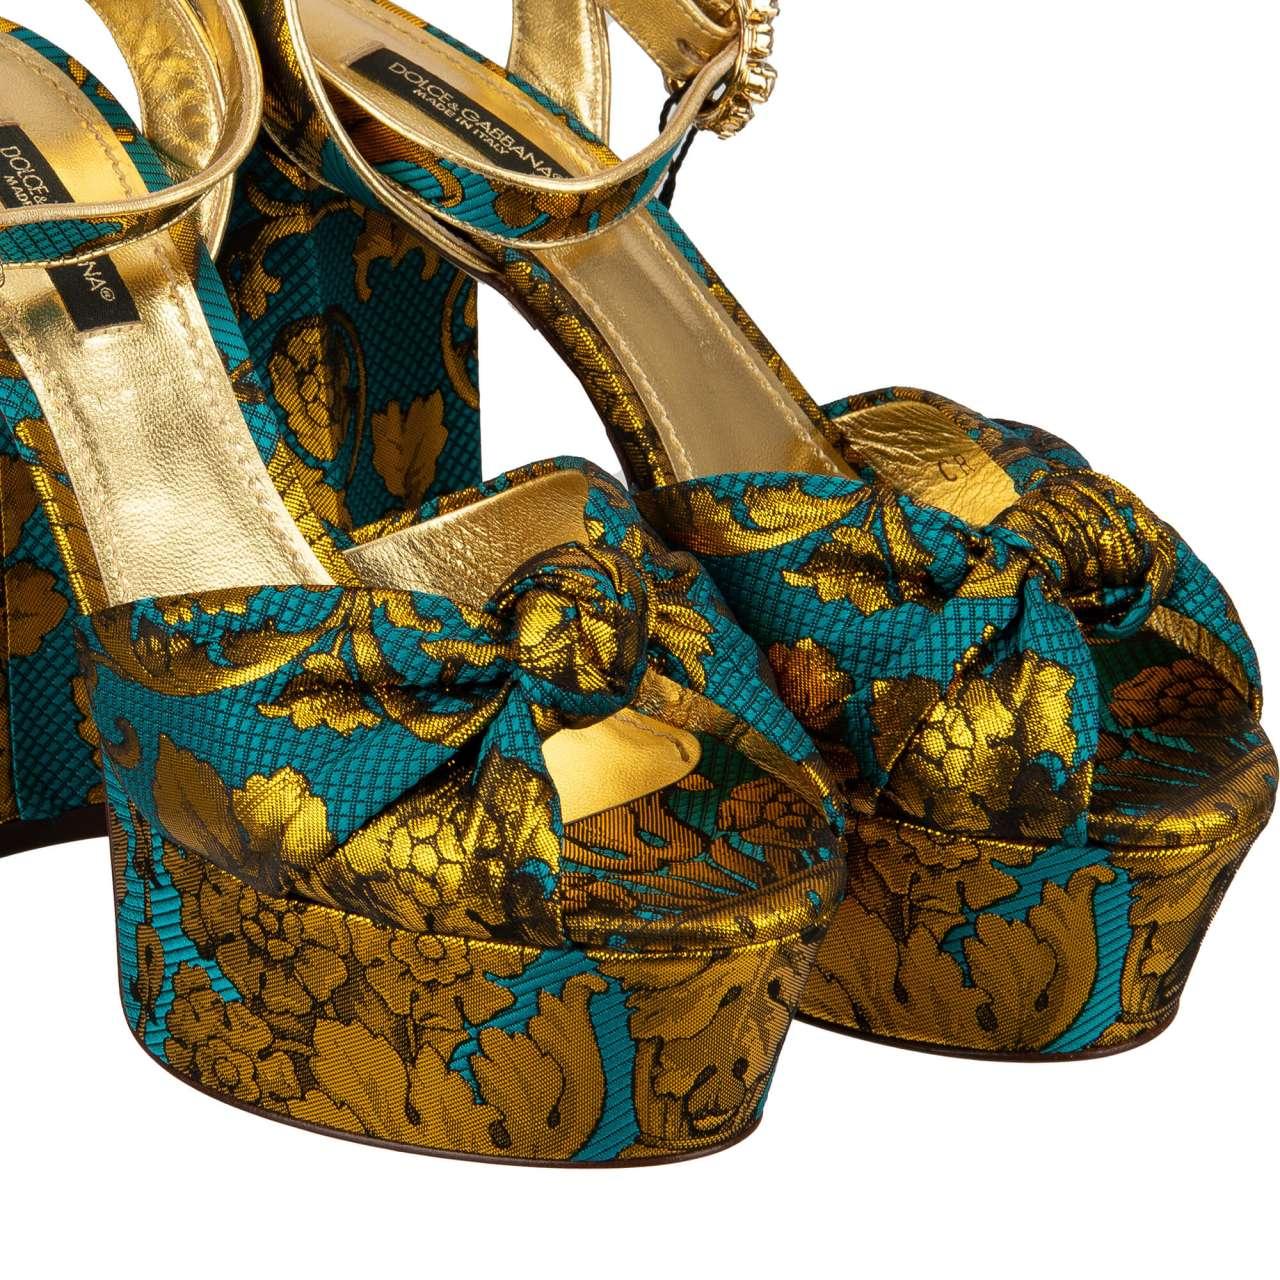 D&G - Baroque Crystal Leather Plateau Pumps Sandals KEIRA Gold Blue 40 3